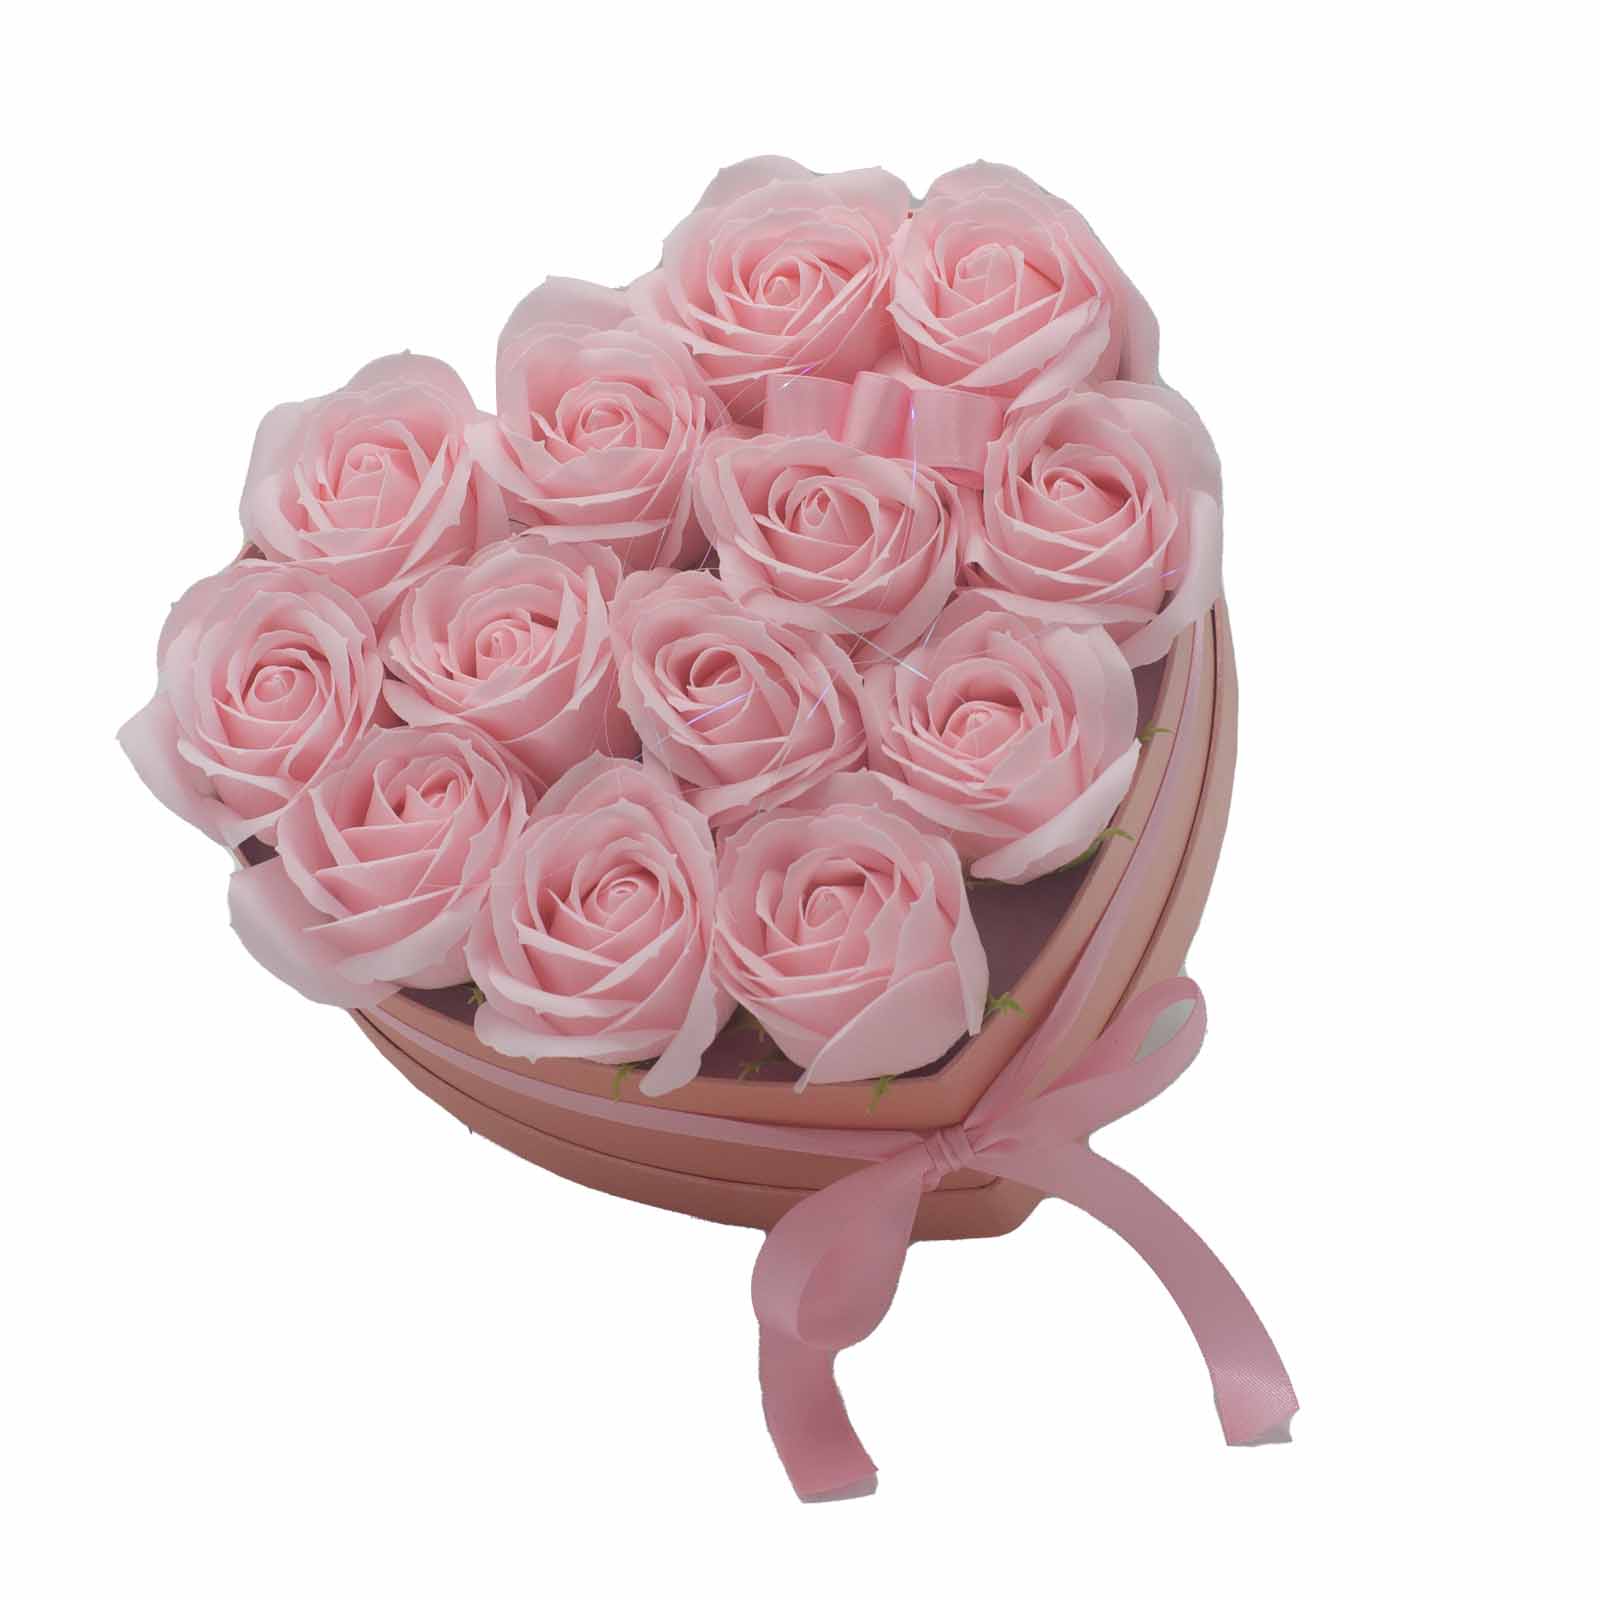 Soap Flower Bouquet - 13 Pink Roses